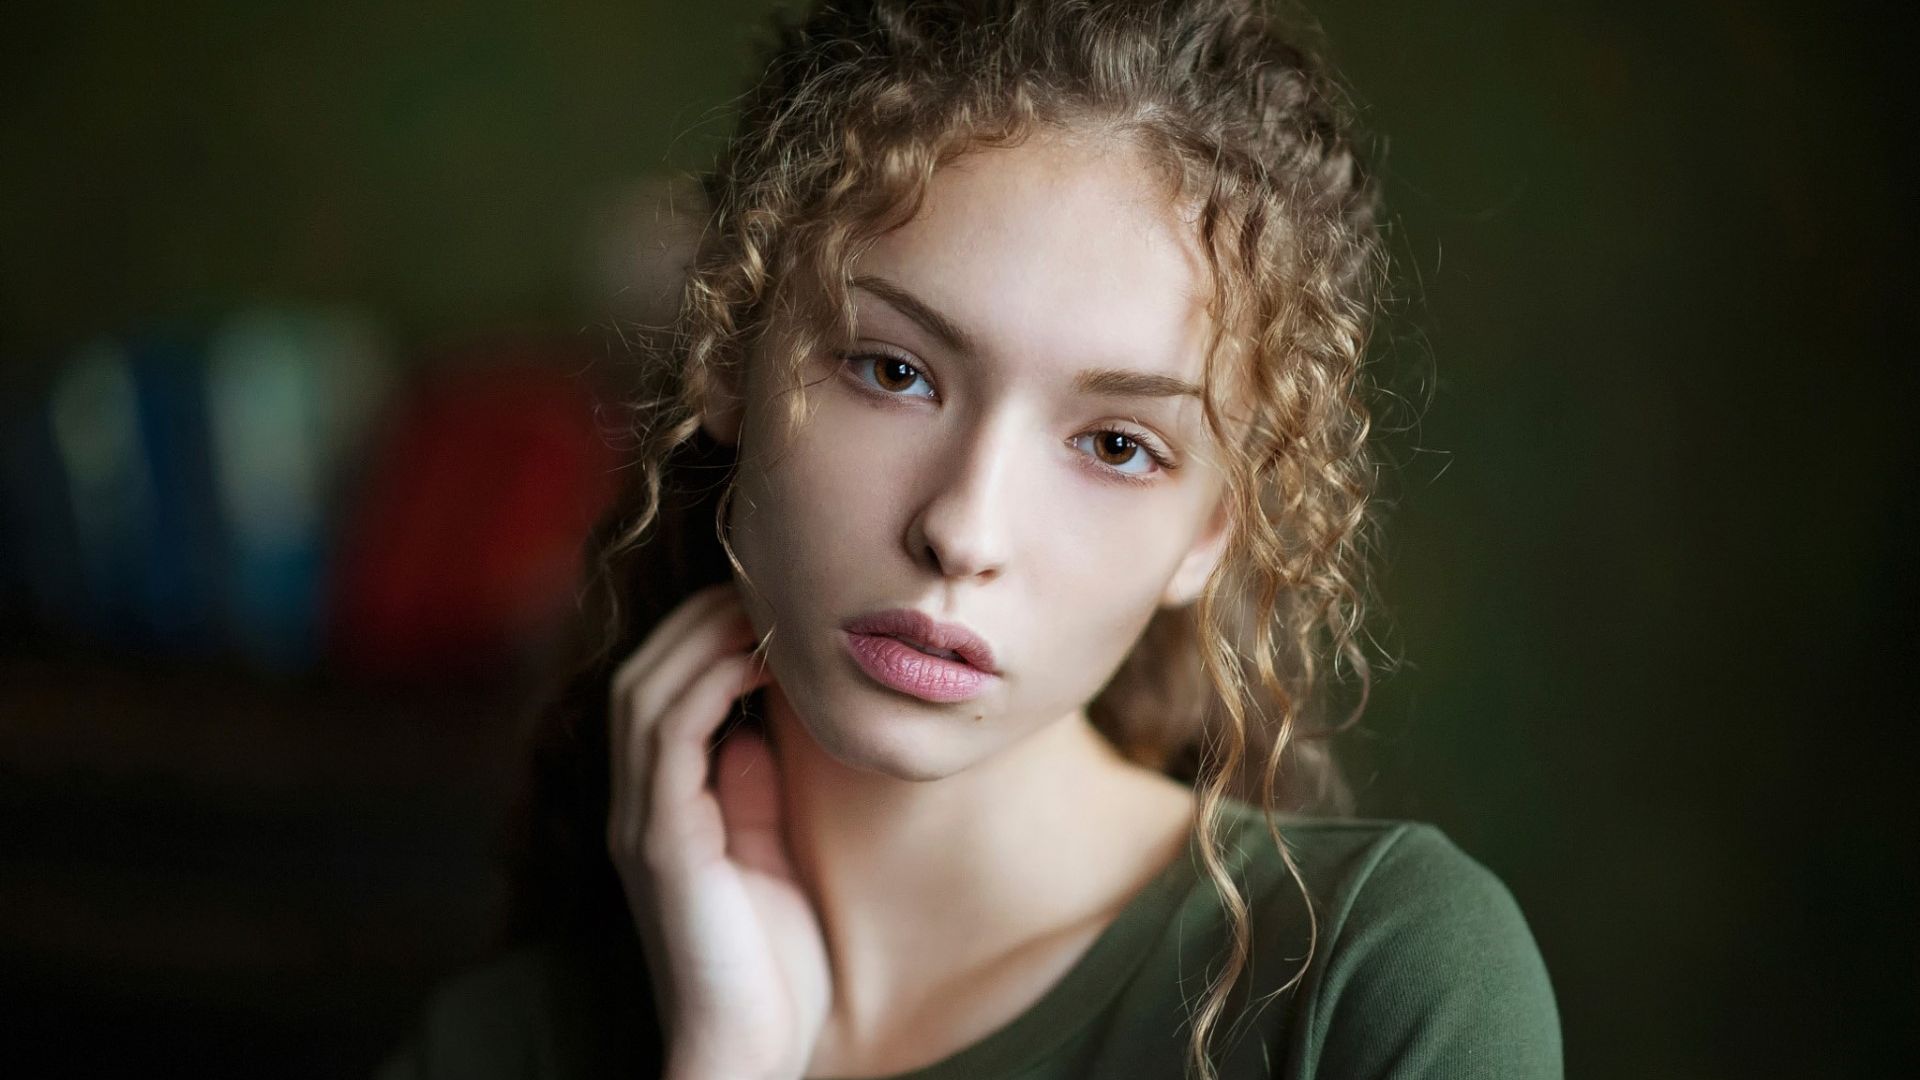 Wallpaper Curly hair cute girl model